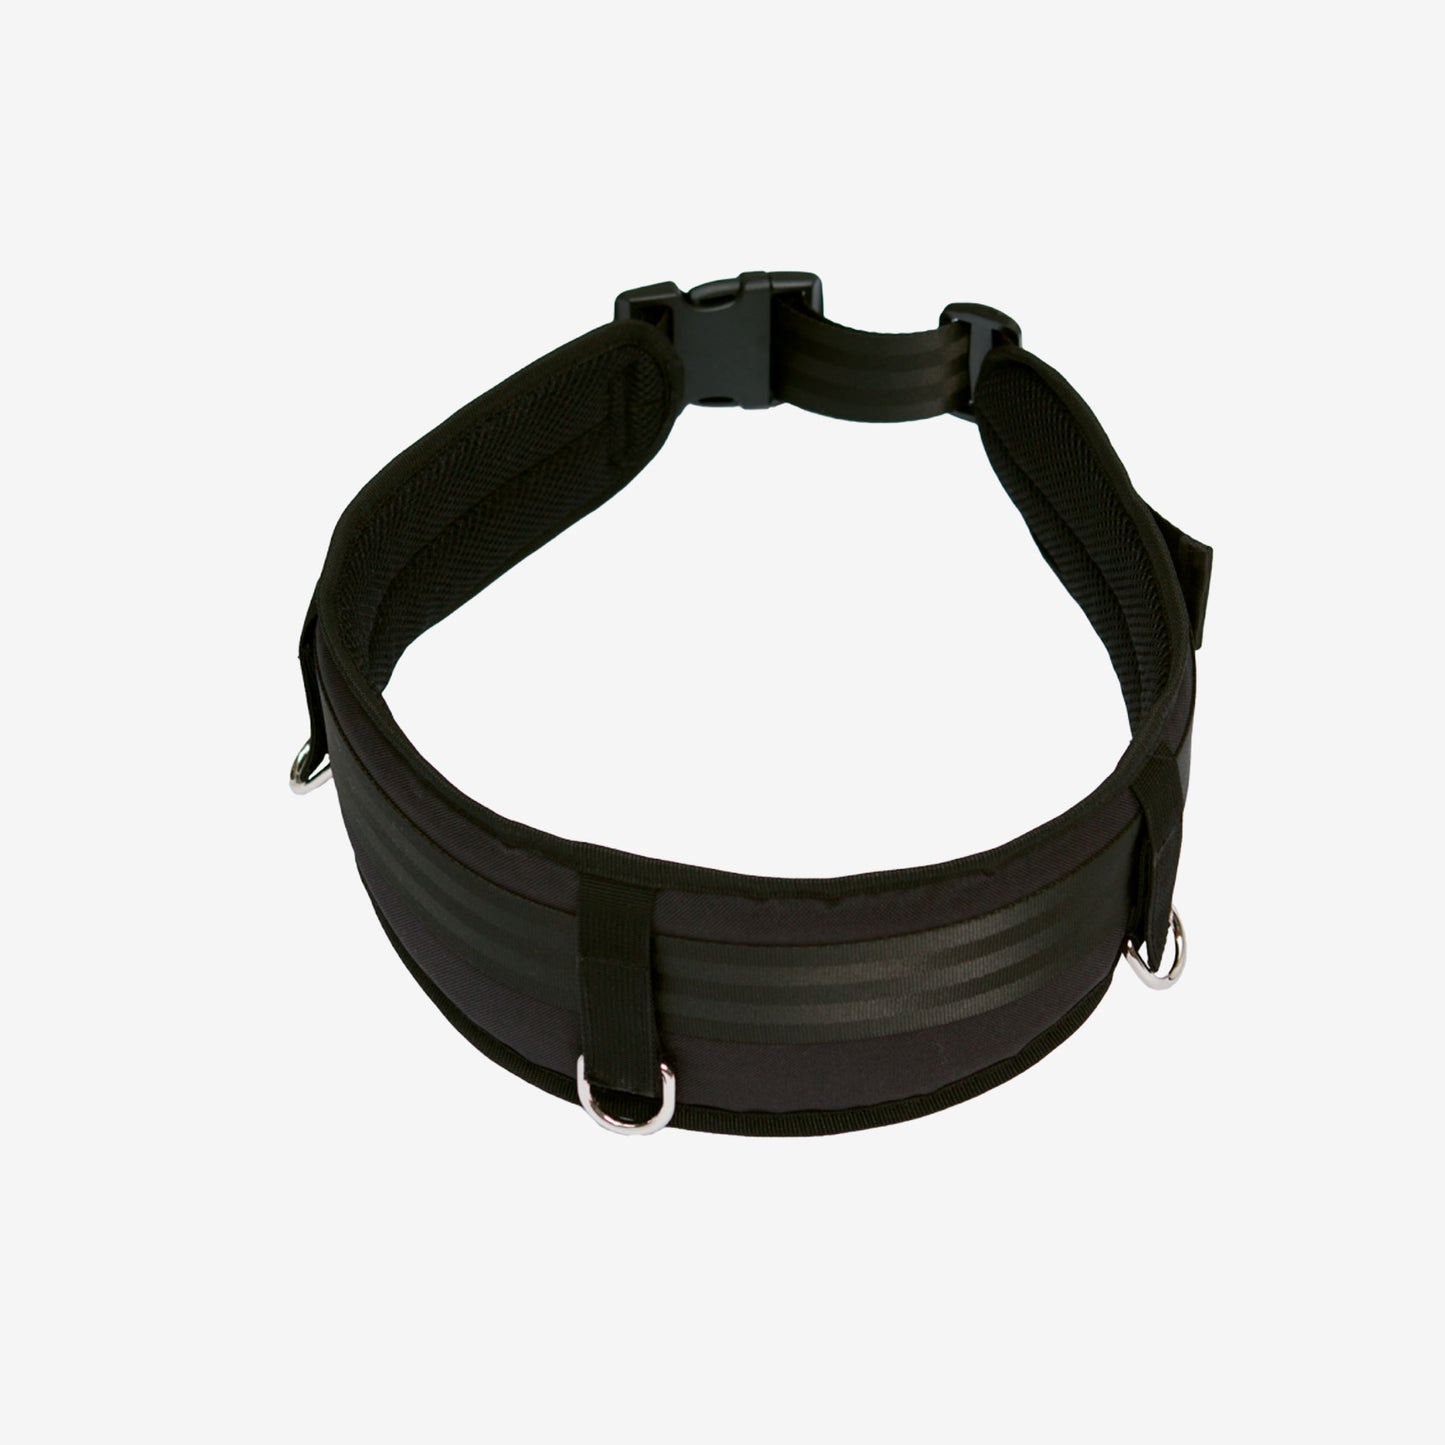 BestBoy Belt Bag - Power Belt